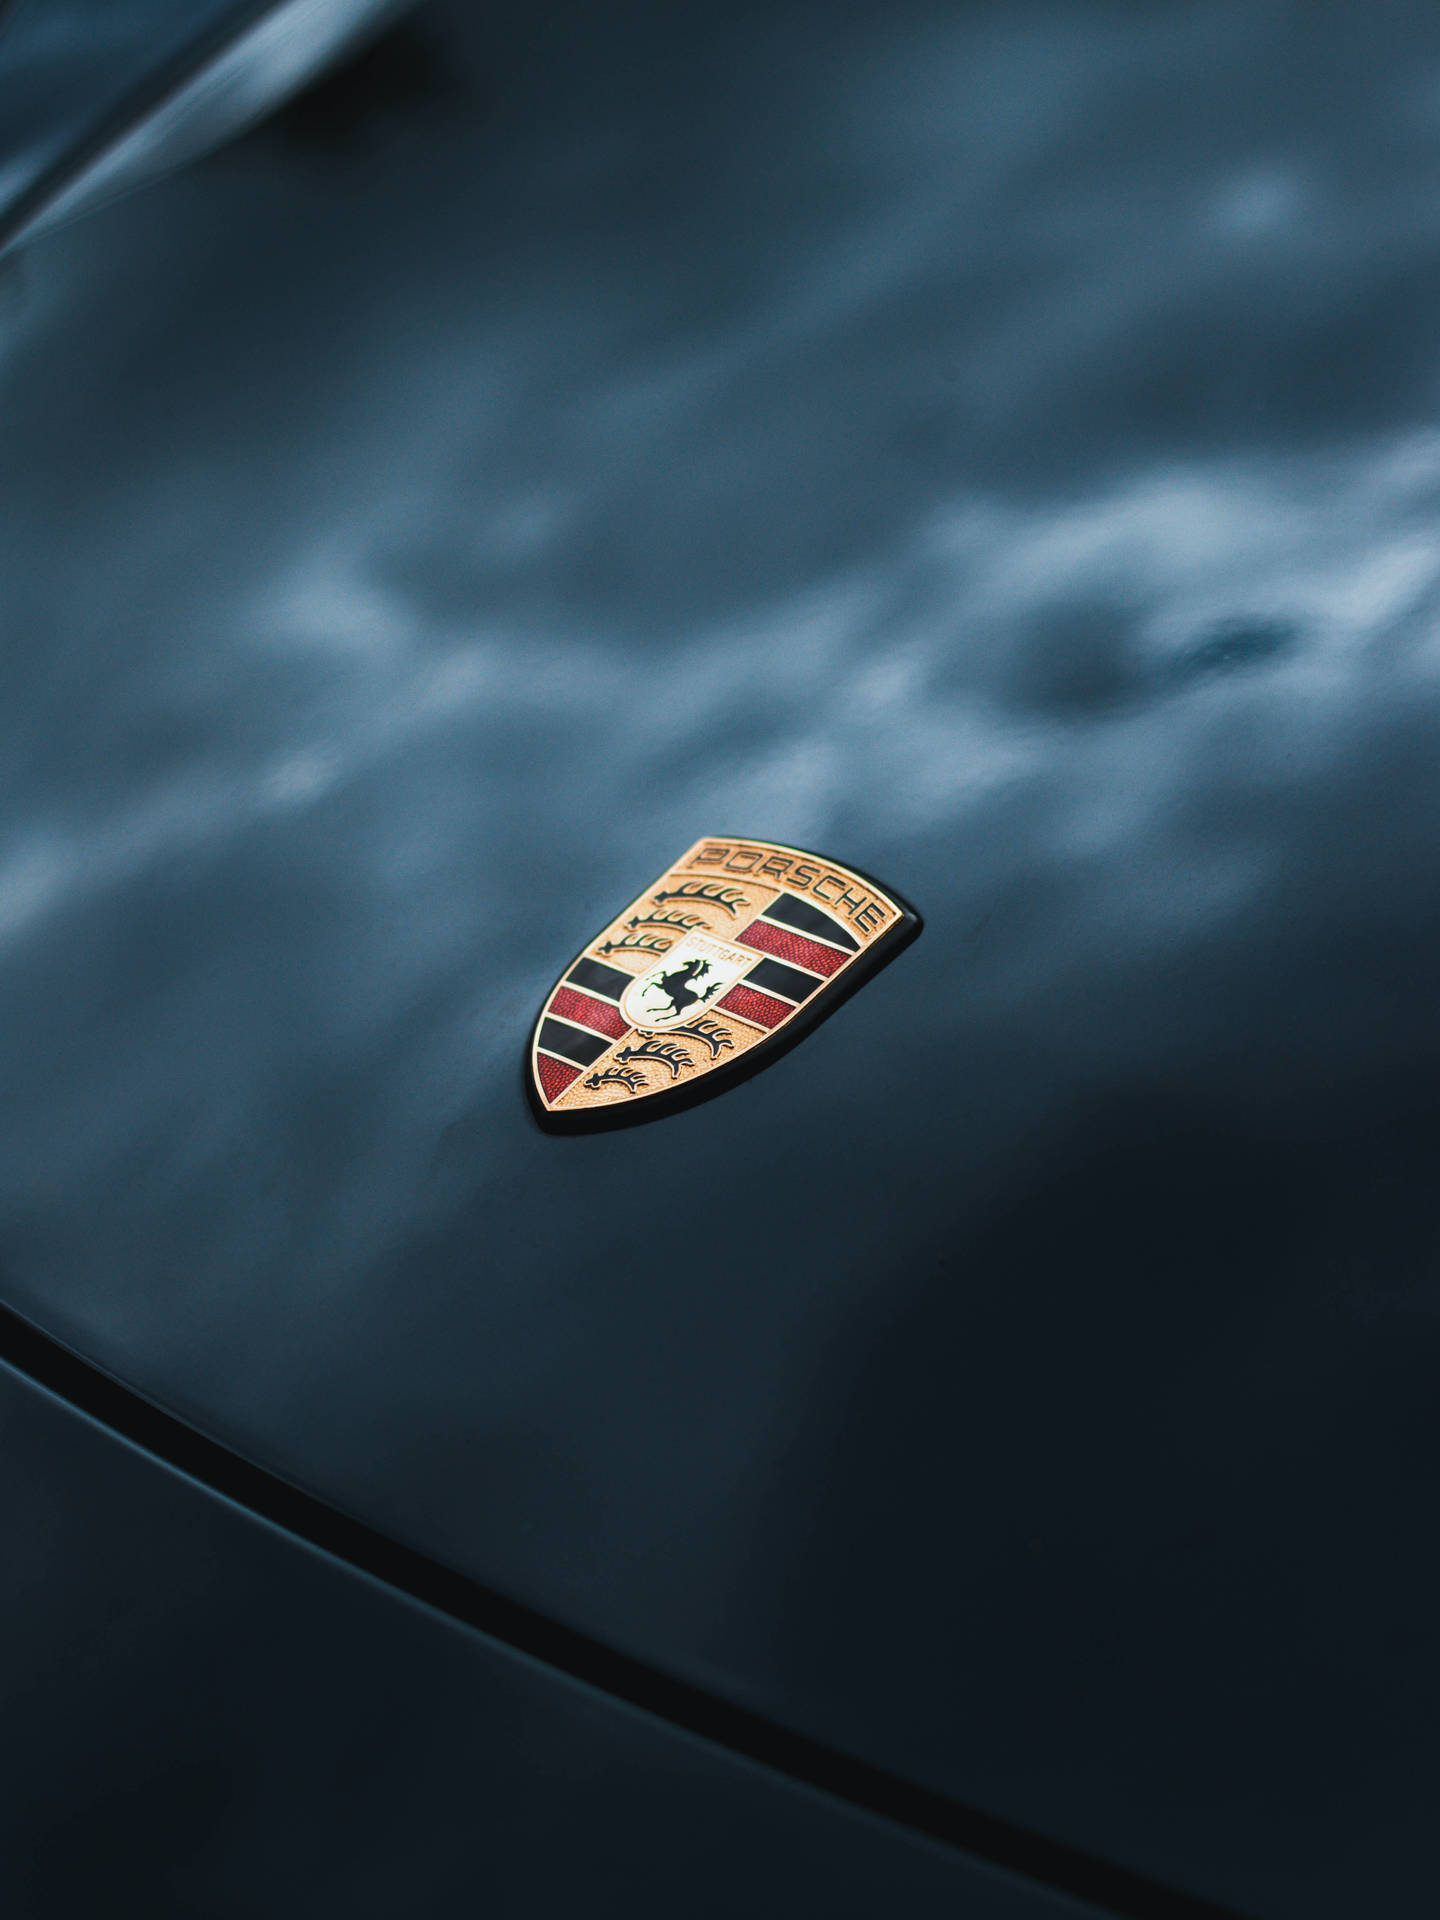 Porsche 4000X5334 Wallpaper and Background Image